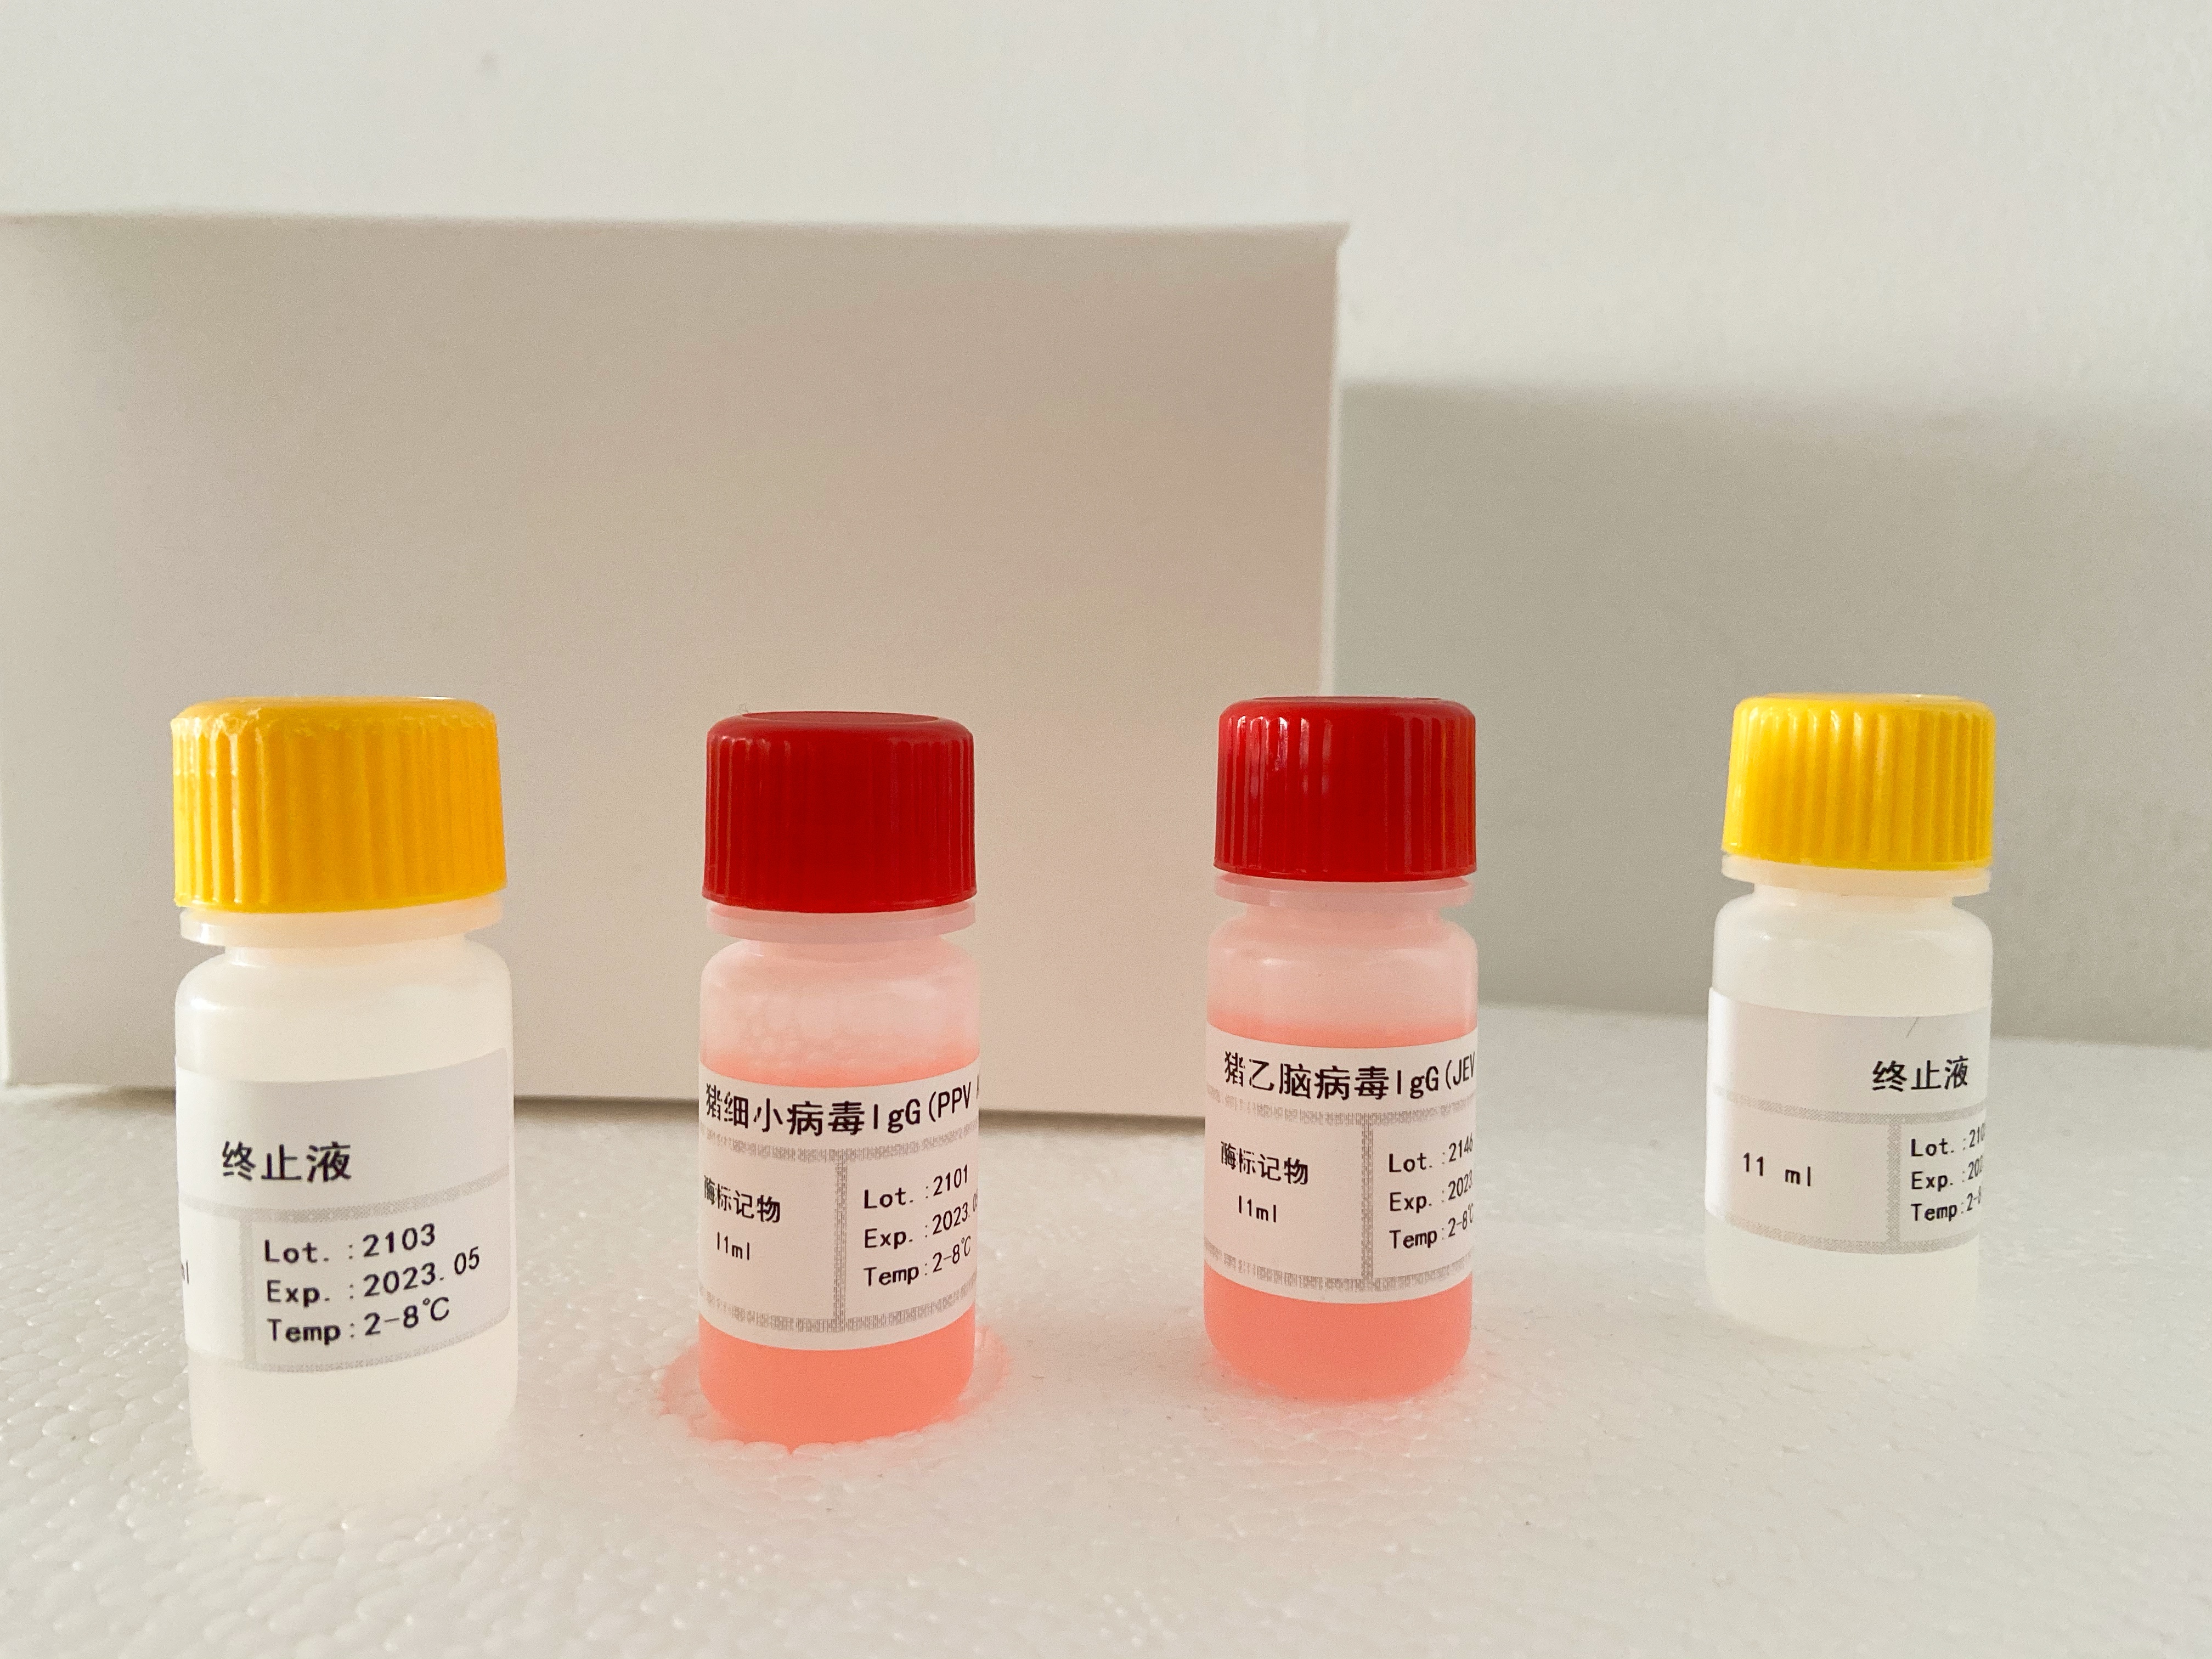 小鼠脂联素(ADP)检测试剂盒